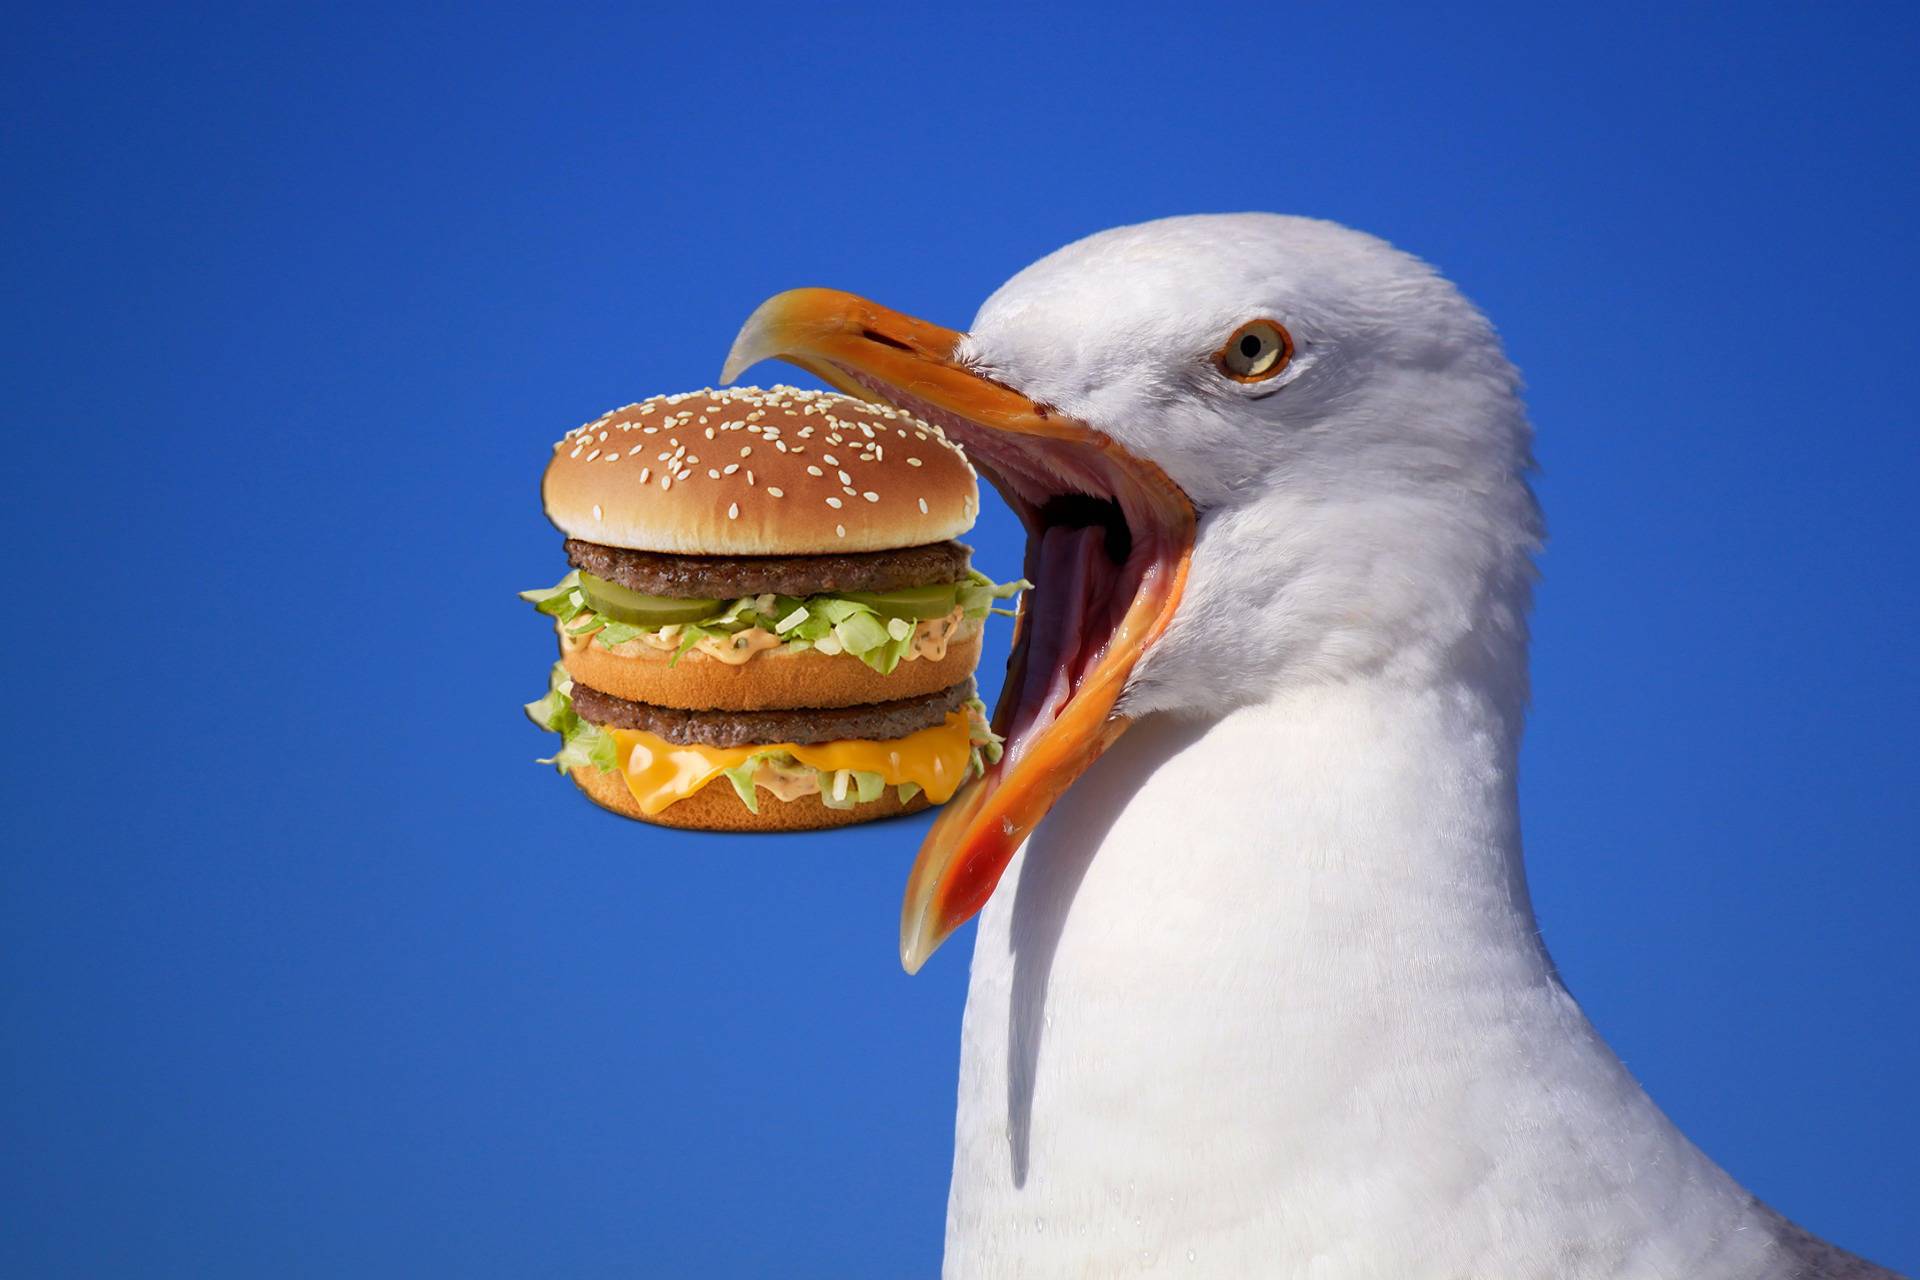 Oko za oko:  Tip ugrizao galeba koji mu je htio oteti hamburger